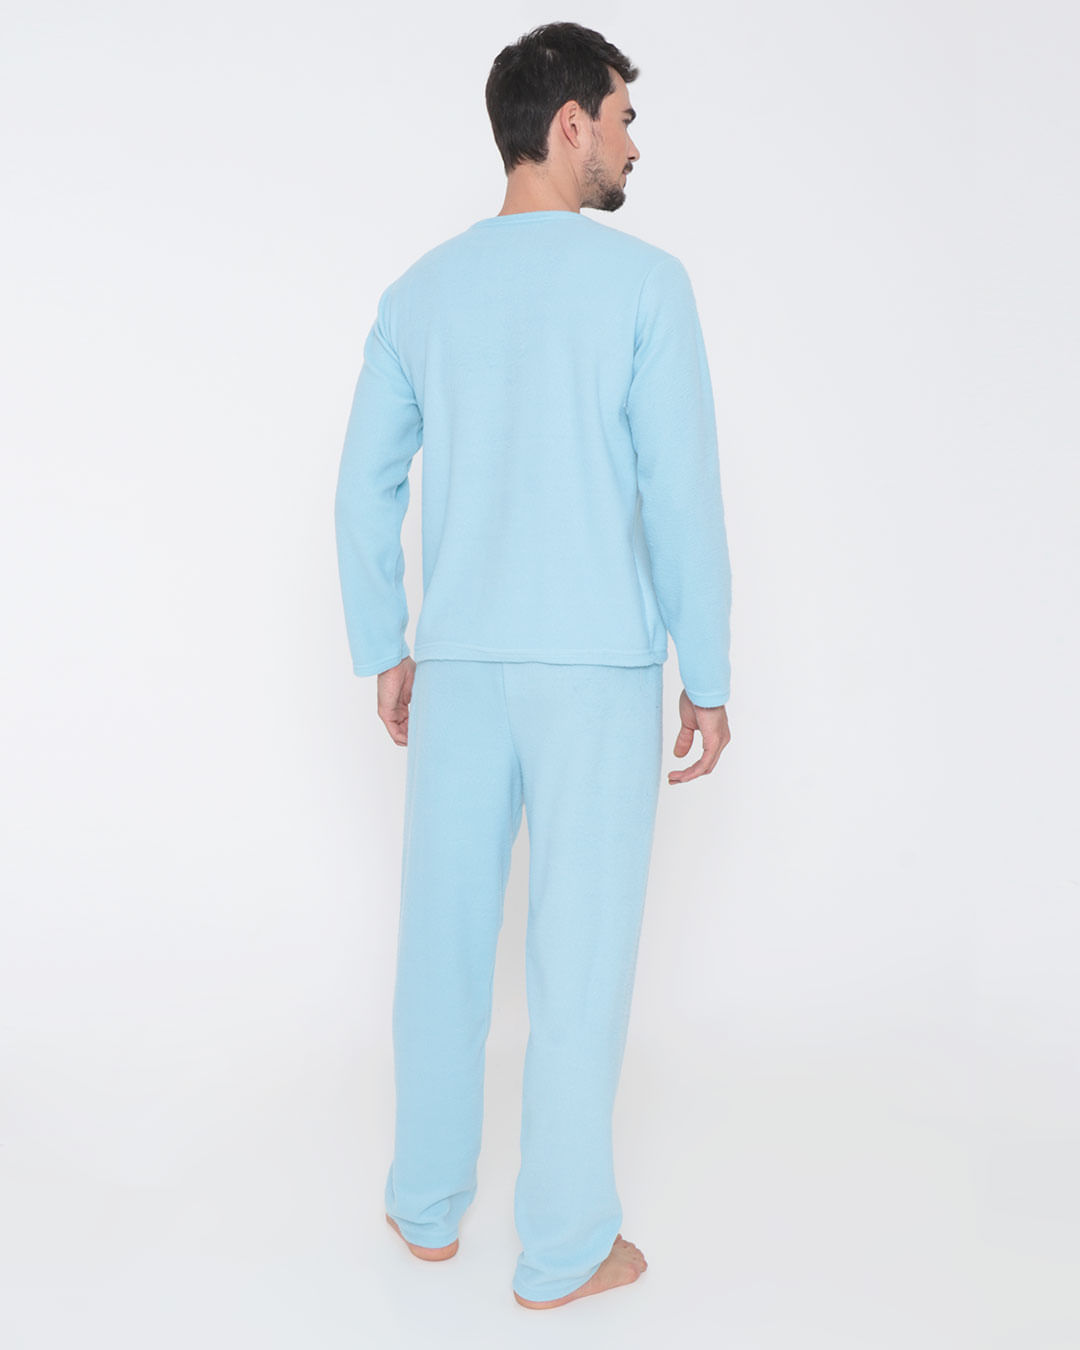 Pijama-Masculino-Gola-V-Soft-Azul-Claro